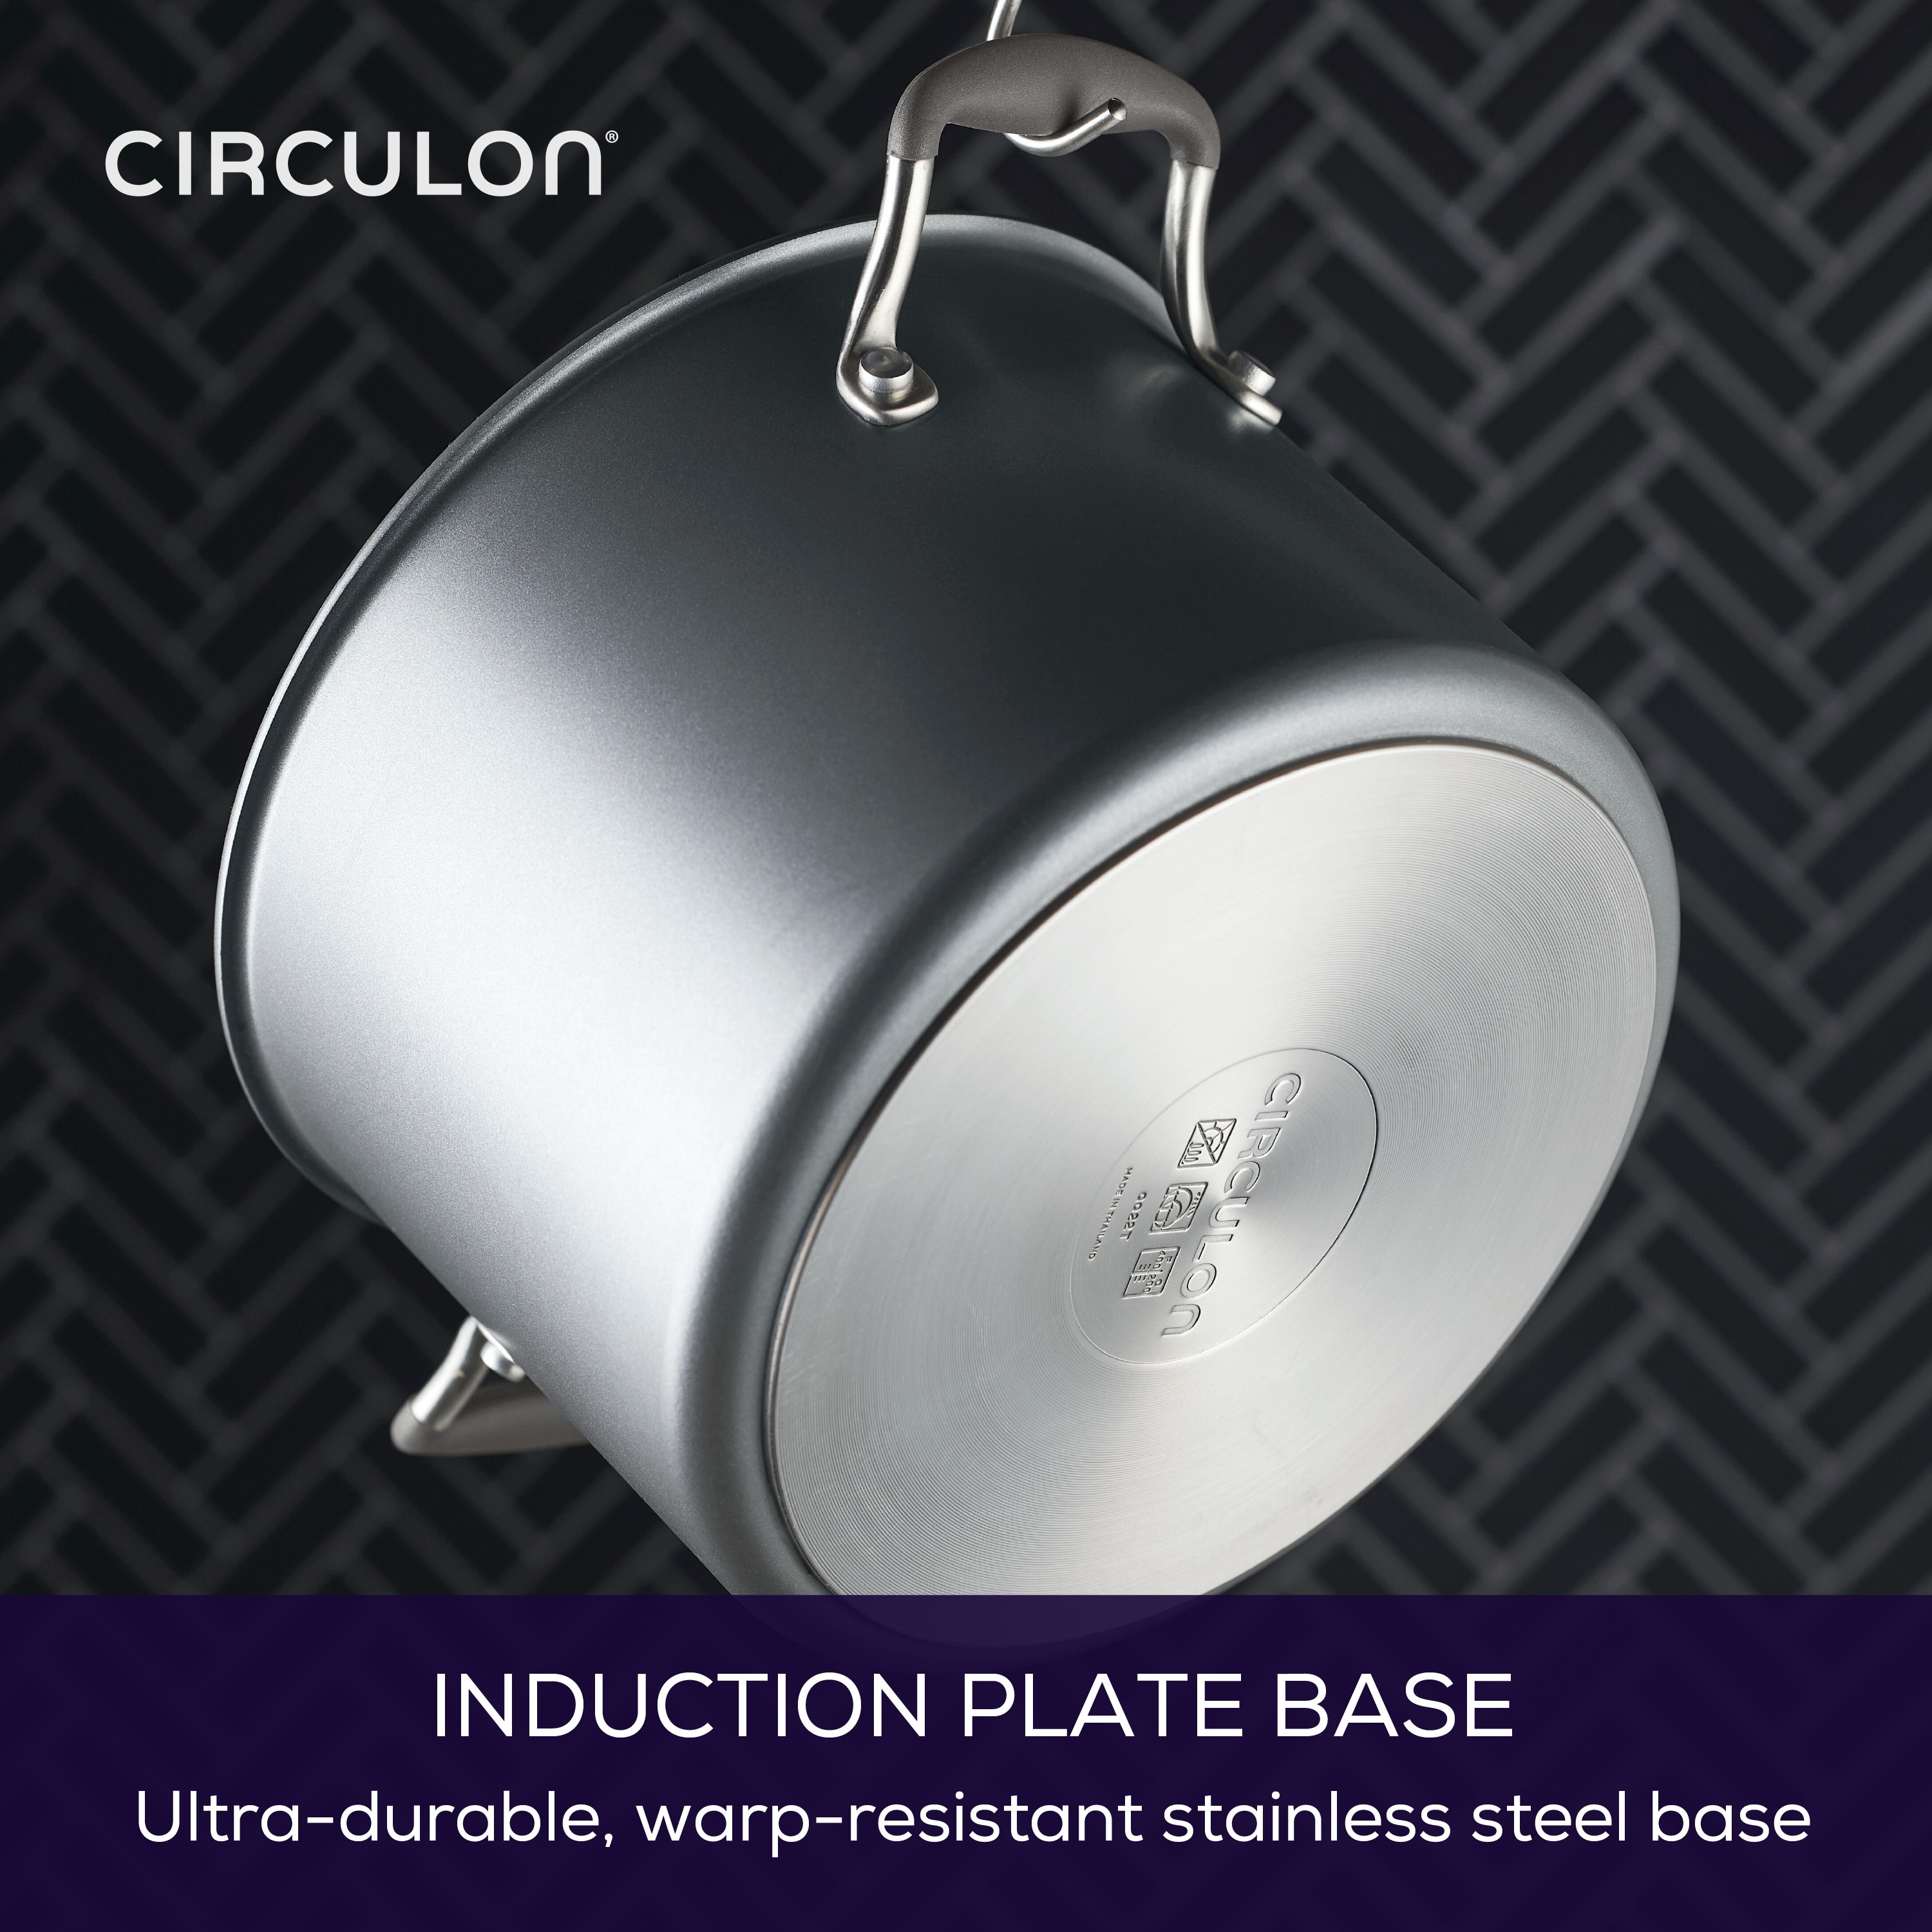 Circulon 5-Quart ScratchDefense A1 Series Nonstick Saute Pan with Lid, Graphite